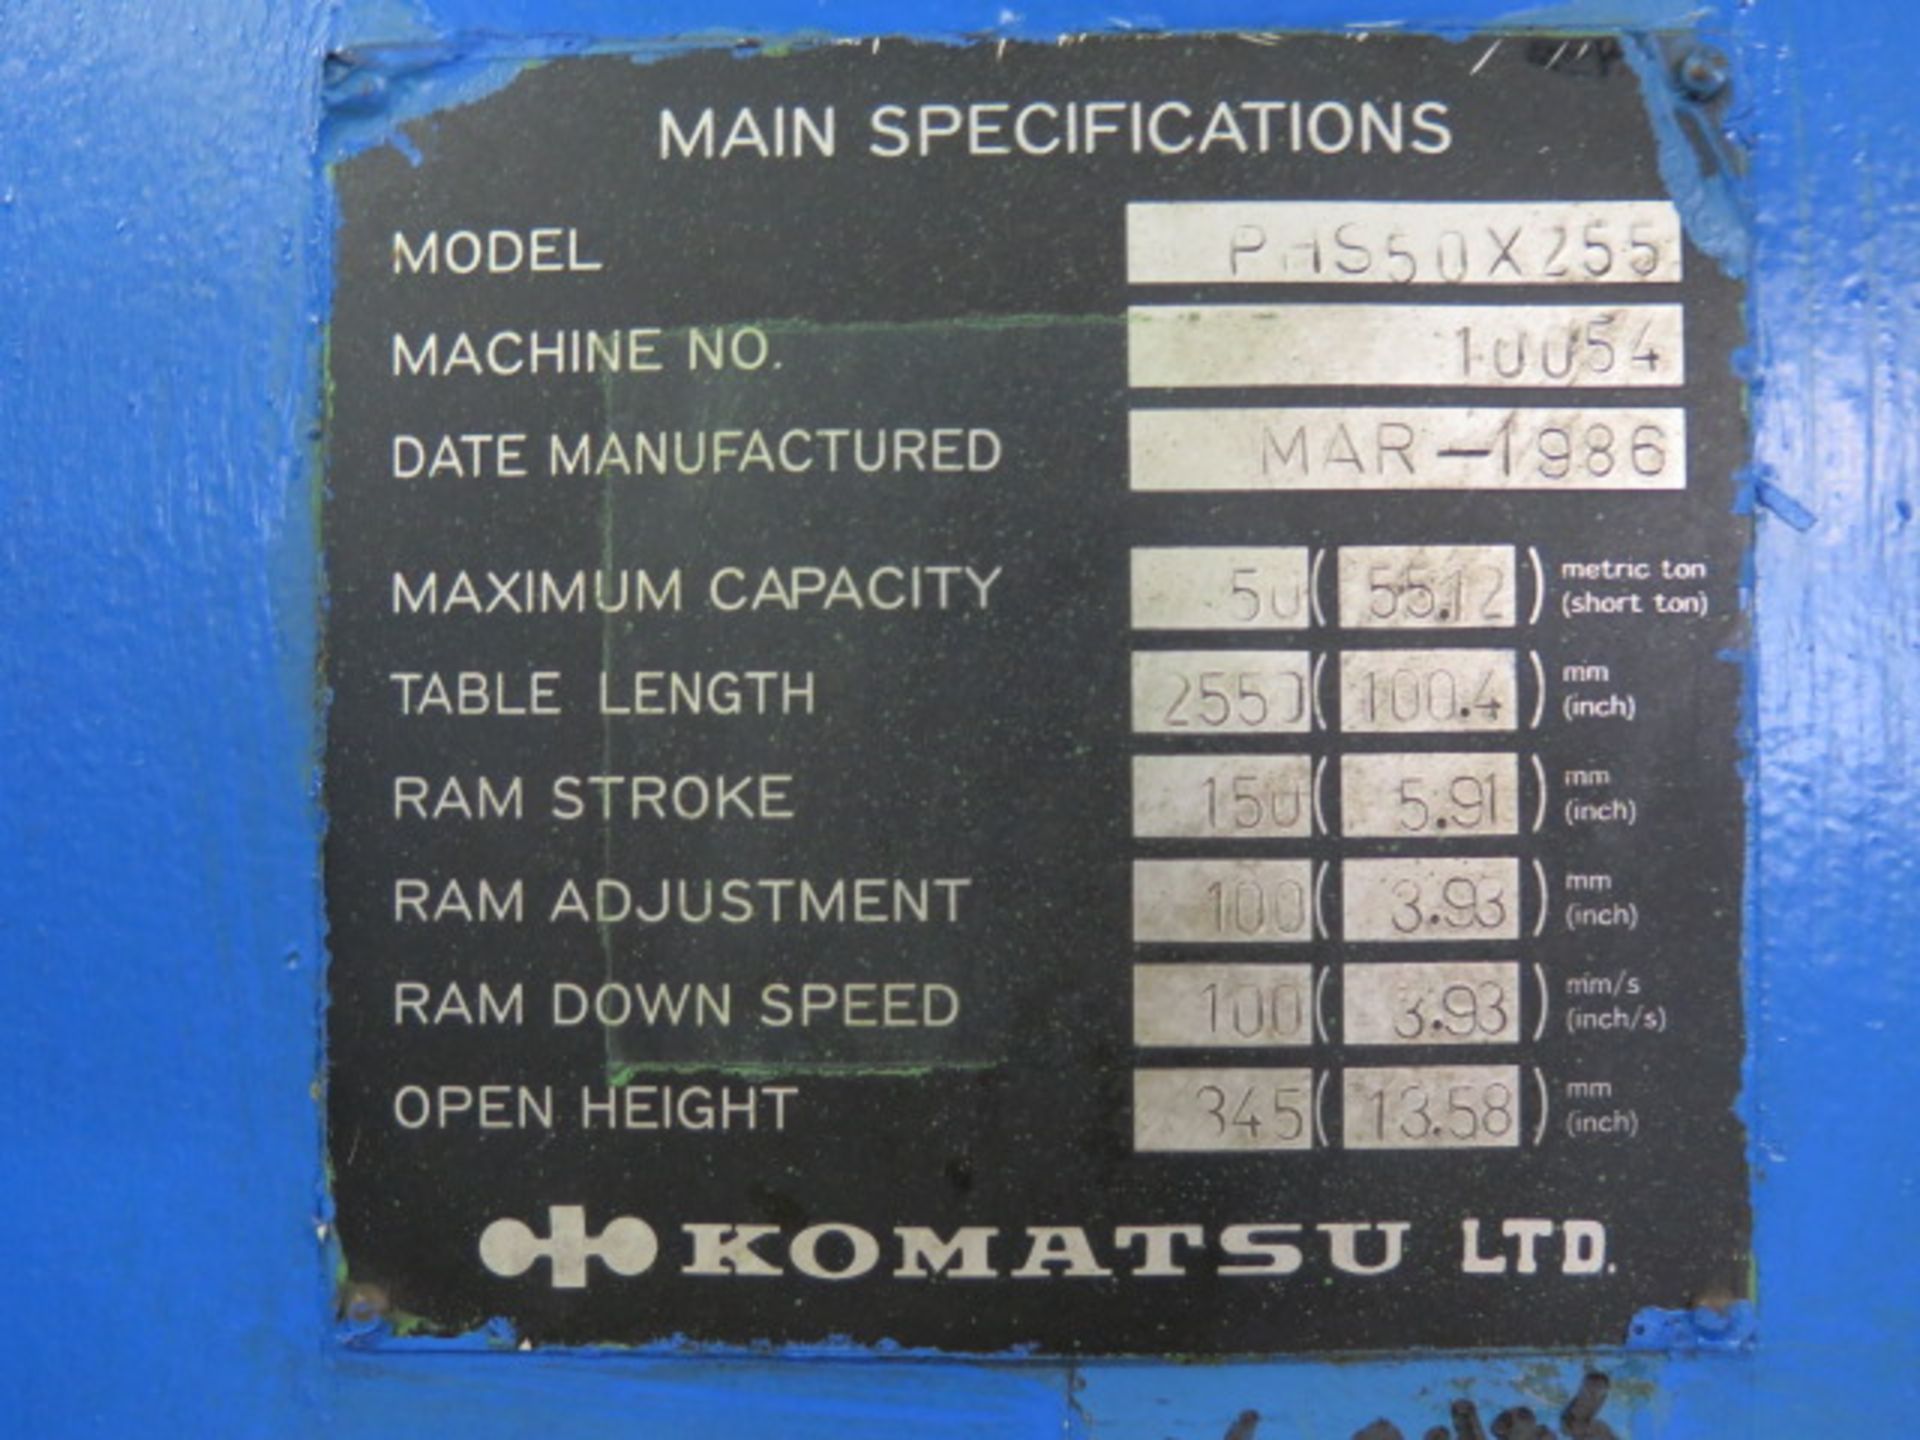 Komatsu PHS 50X255 50-Ton x 100" CNC Press Brake s/n 10054 w/ Autogauge G24 Controls, SOLD AS IS - Image 14 of 14